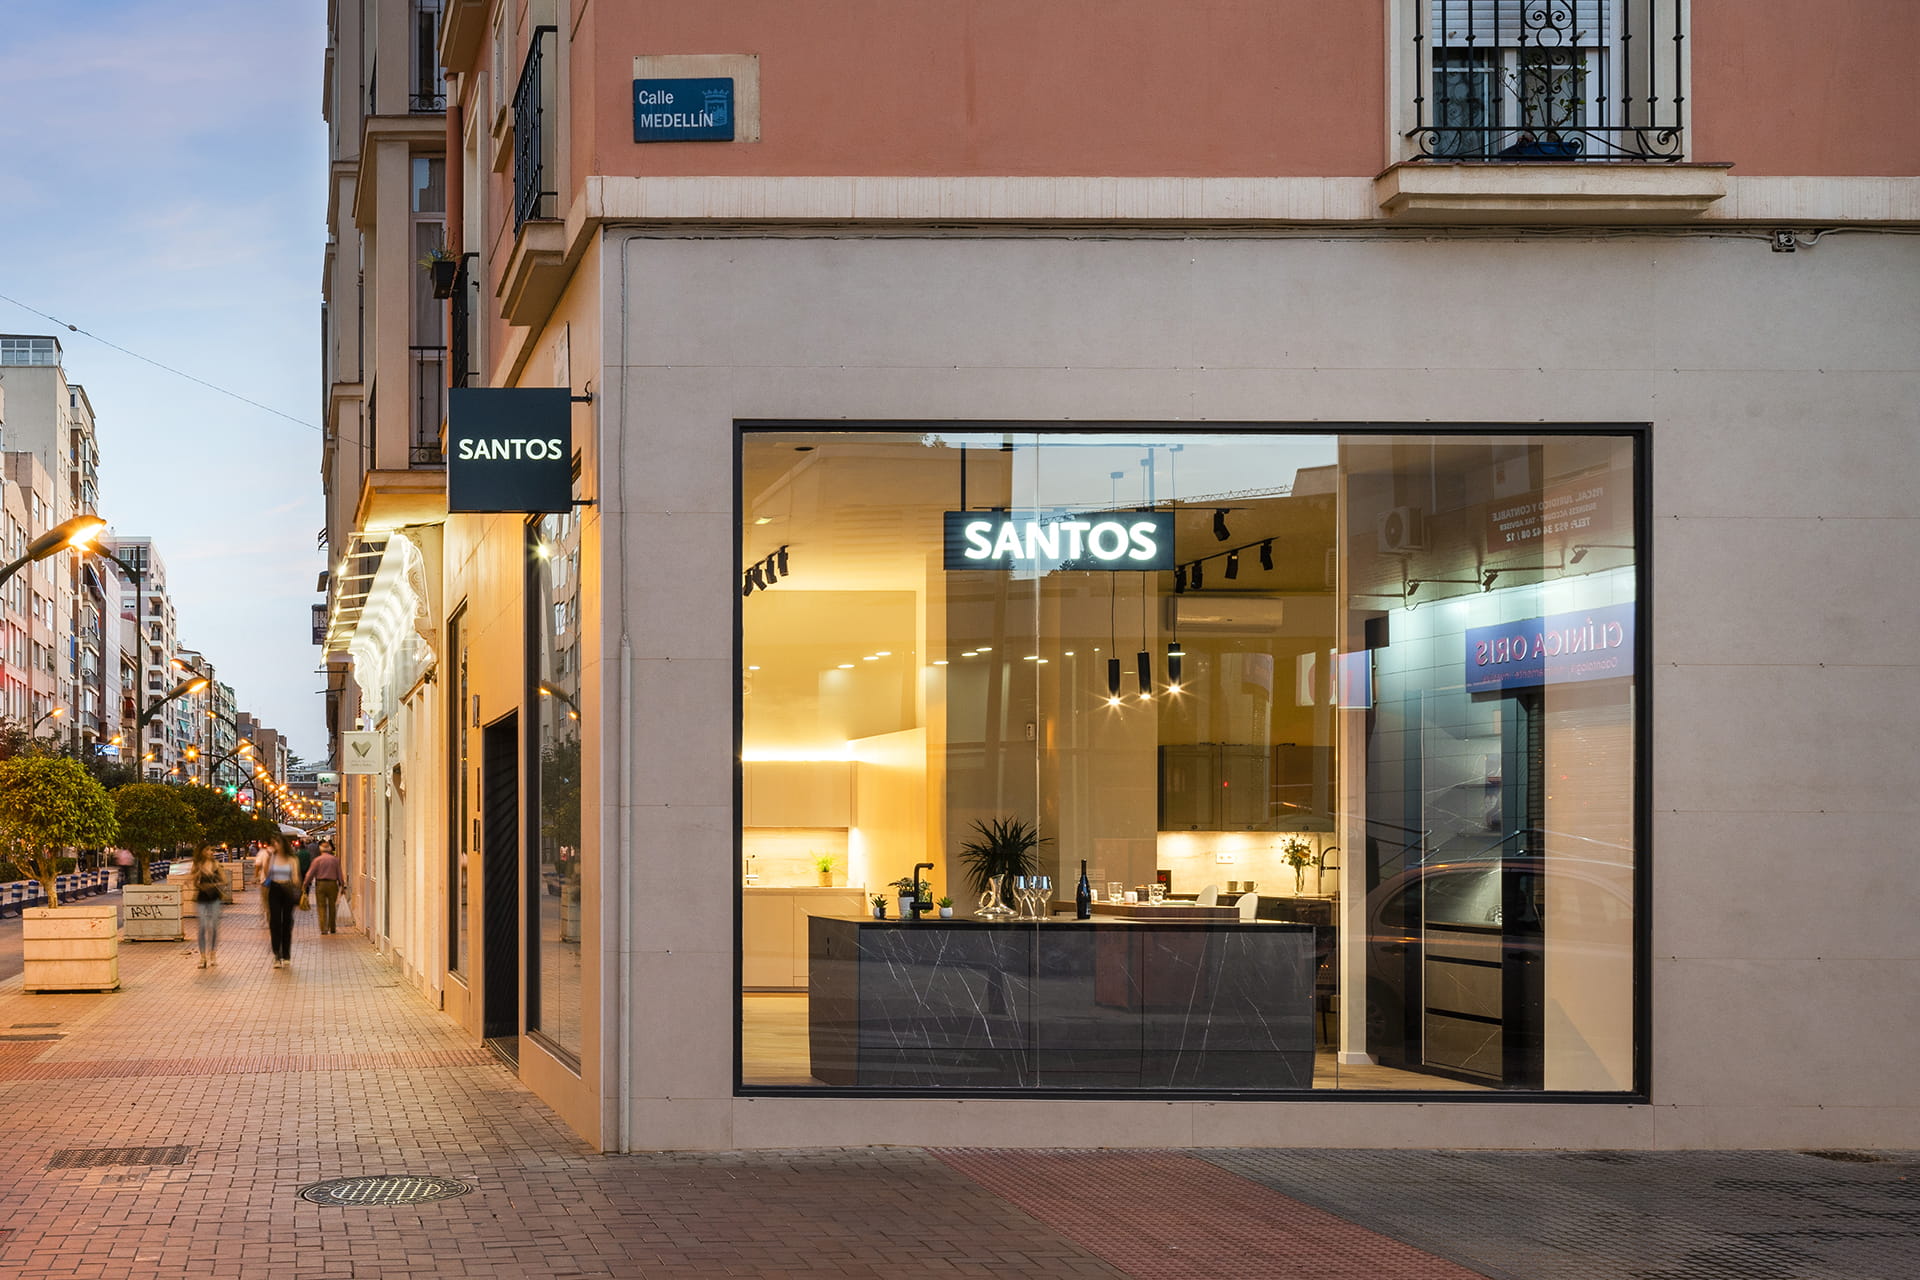 Buitenzijde van de Santos keukenwinkel in Málaga